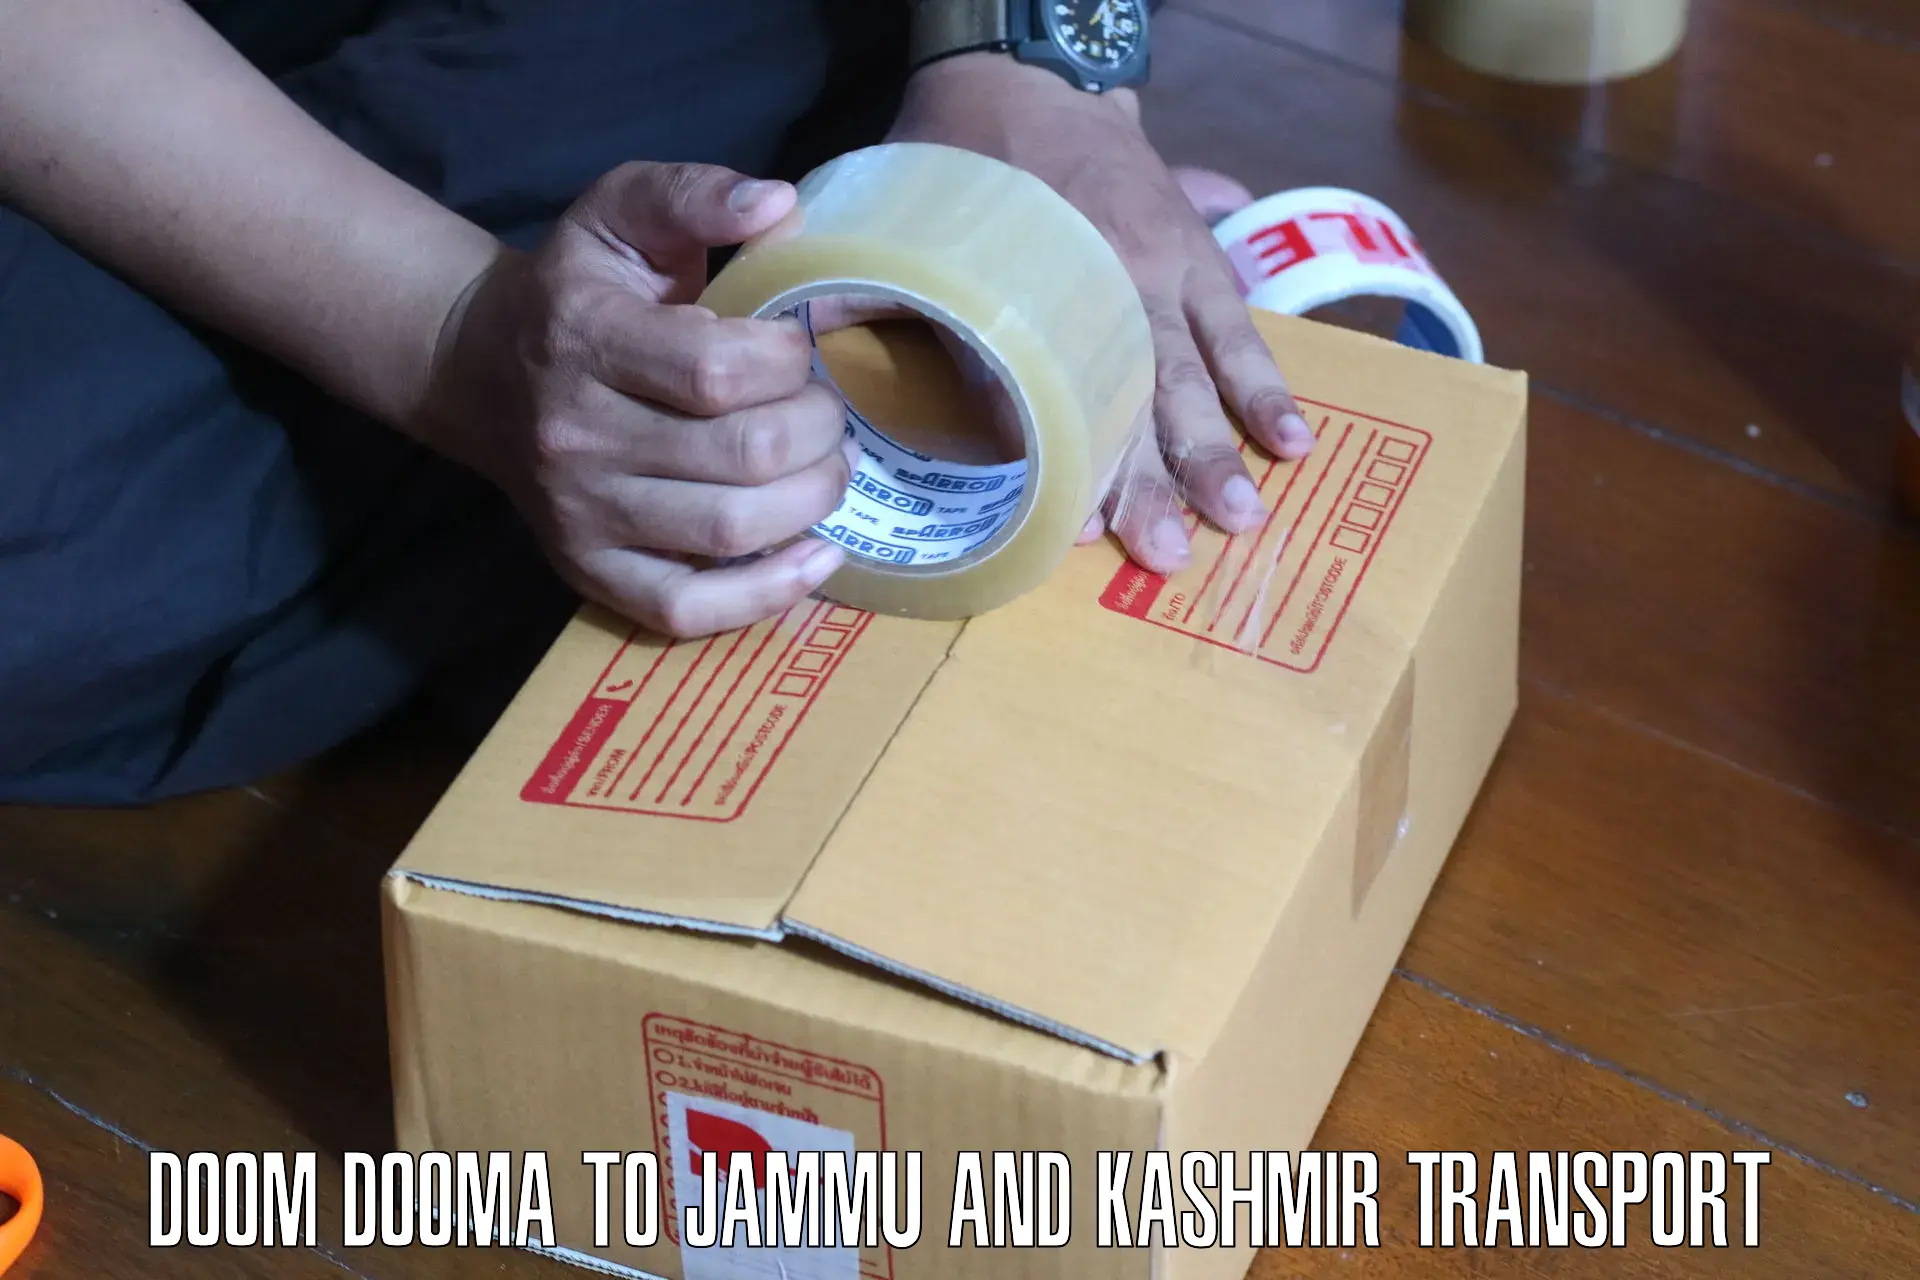 Pick up transport service Doom Dooma to Samba